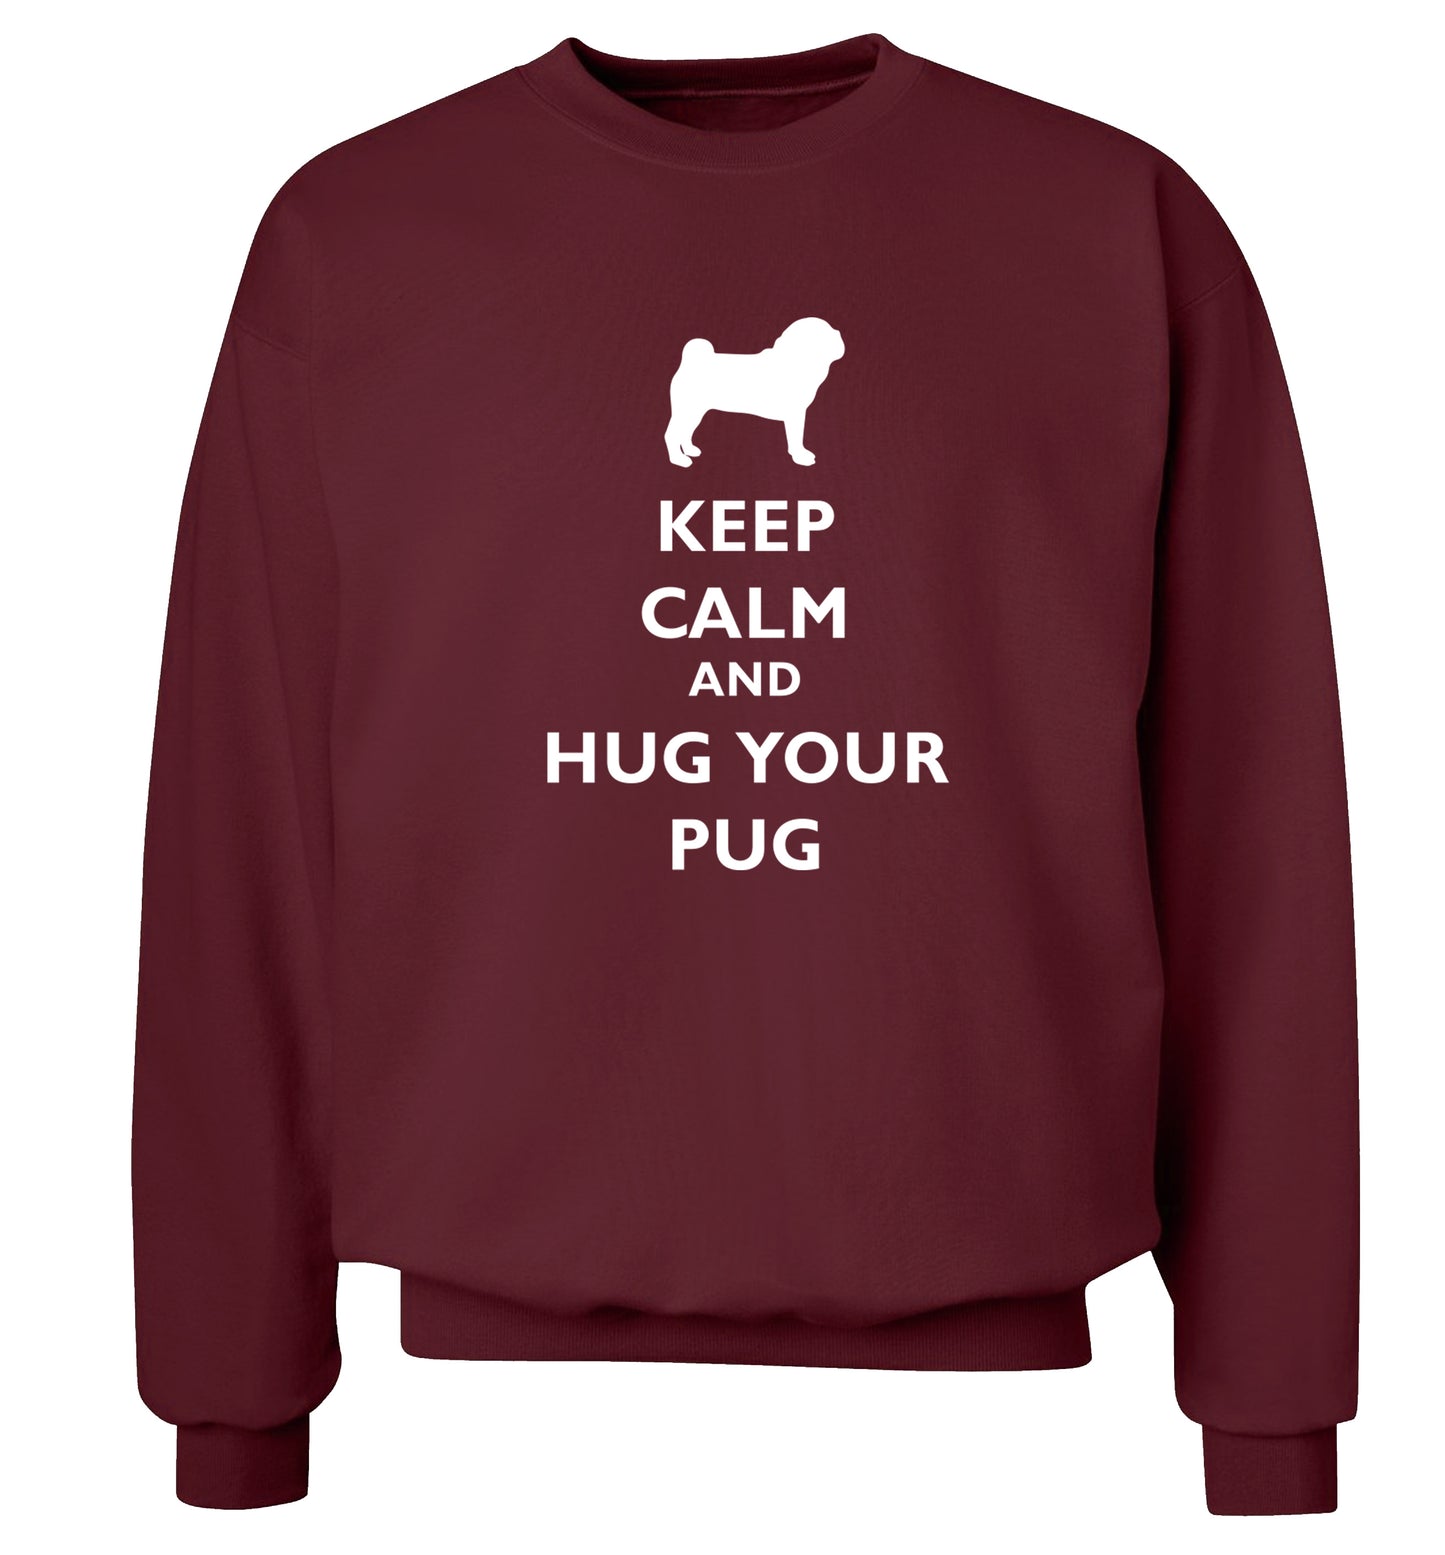 Keep calm and hug your pug Adult's unisex maroon Sweater 2XL